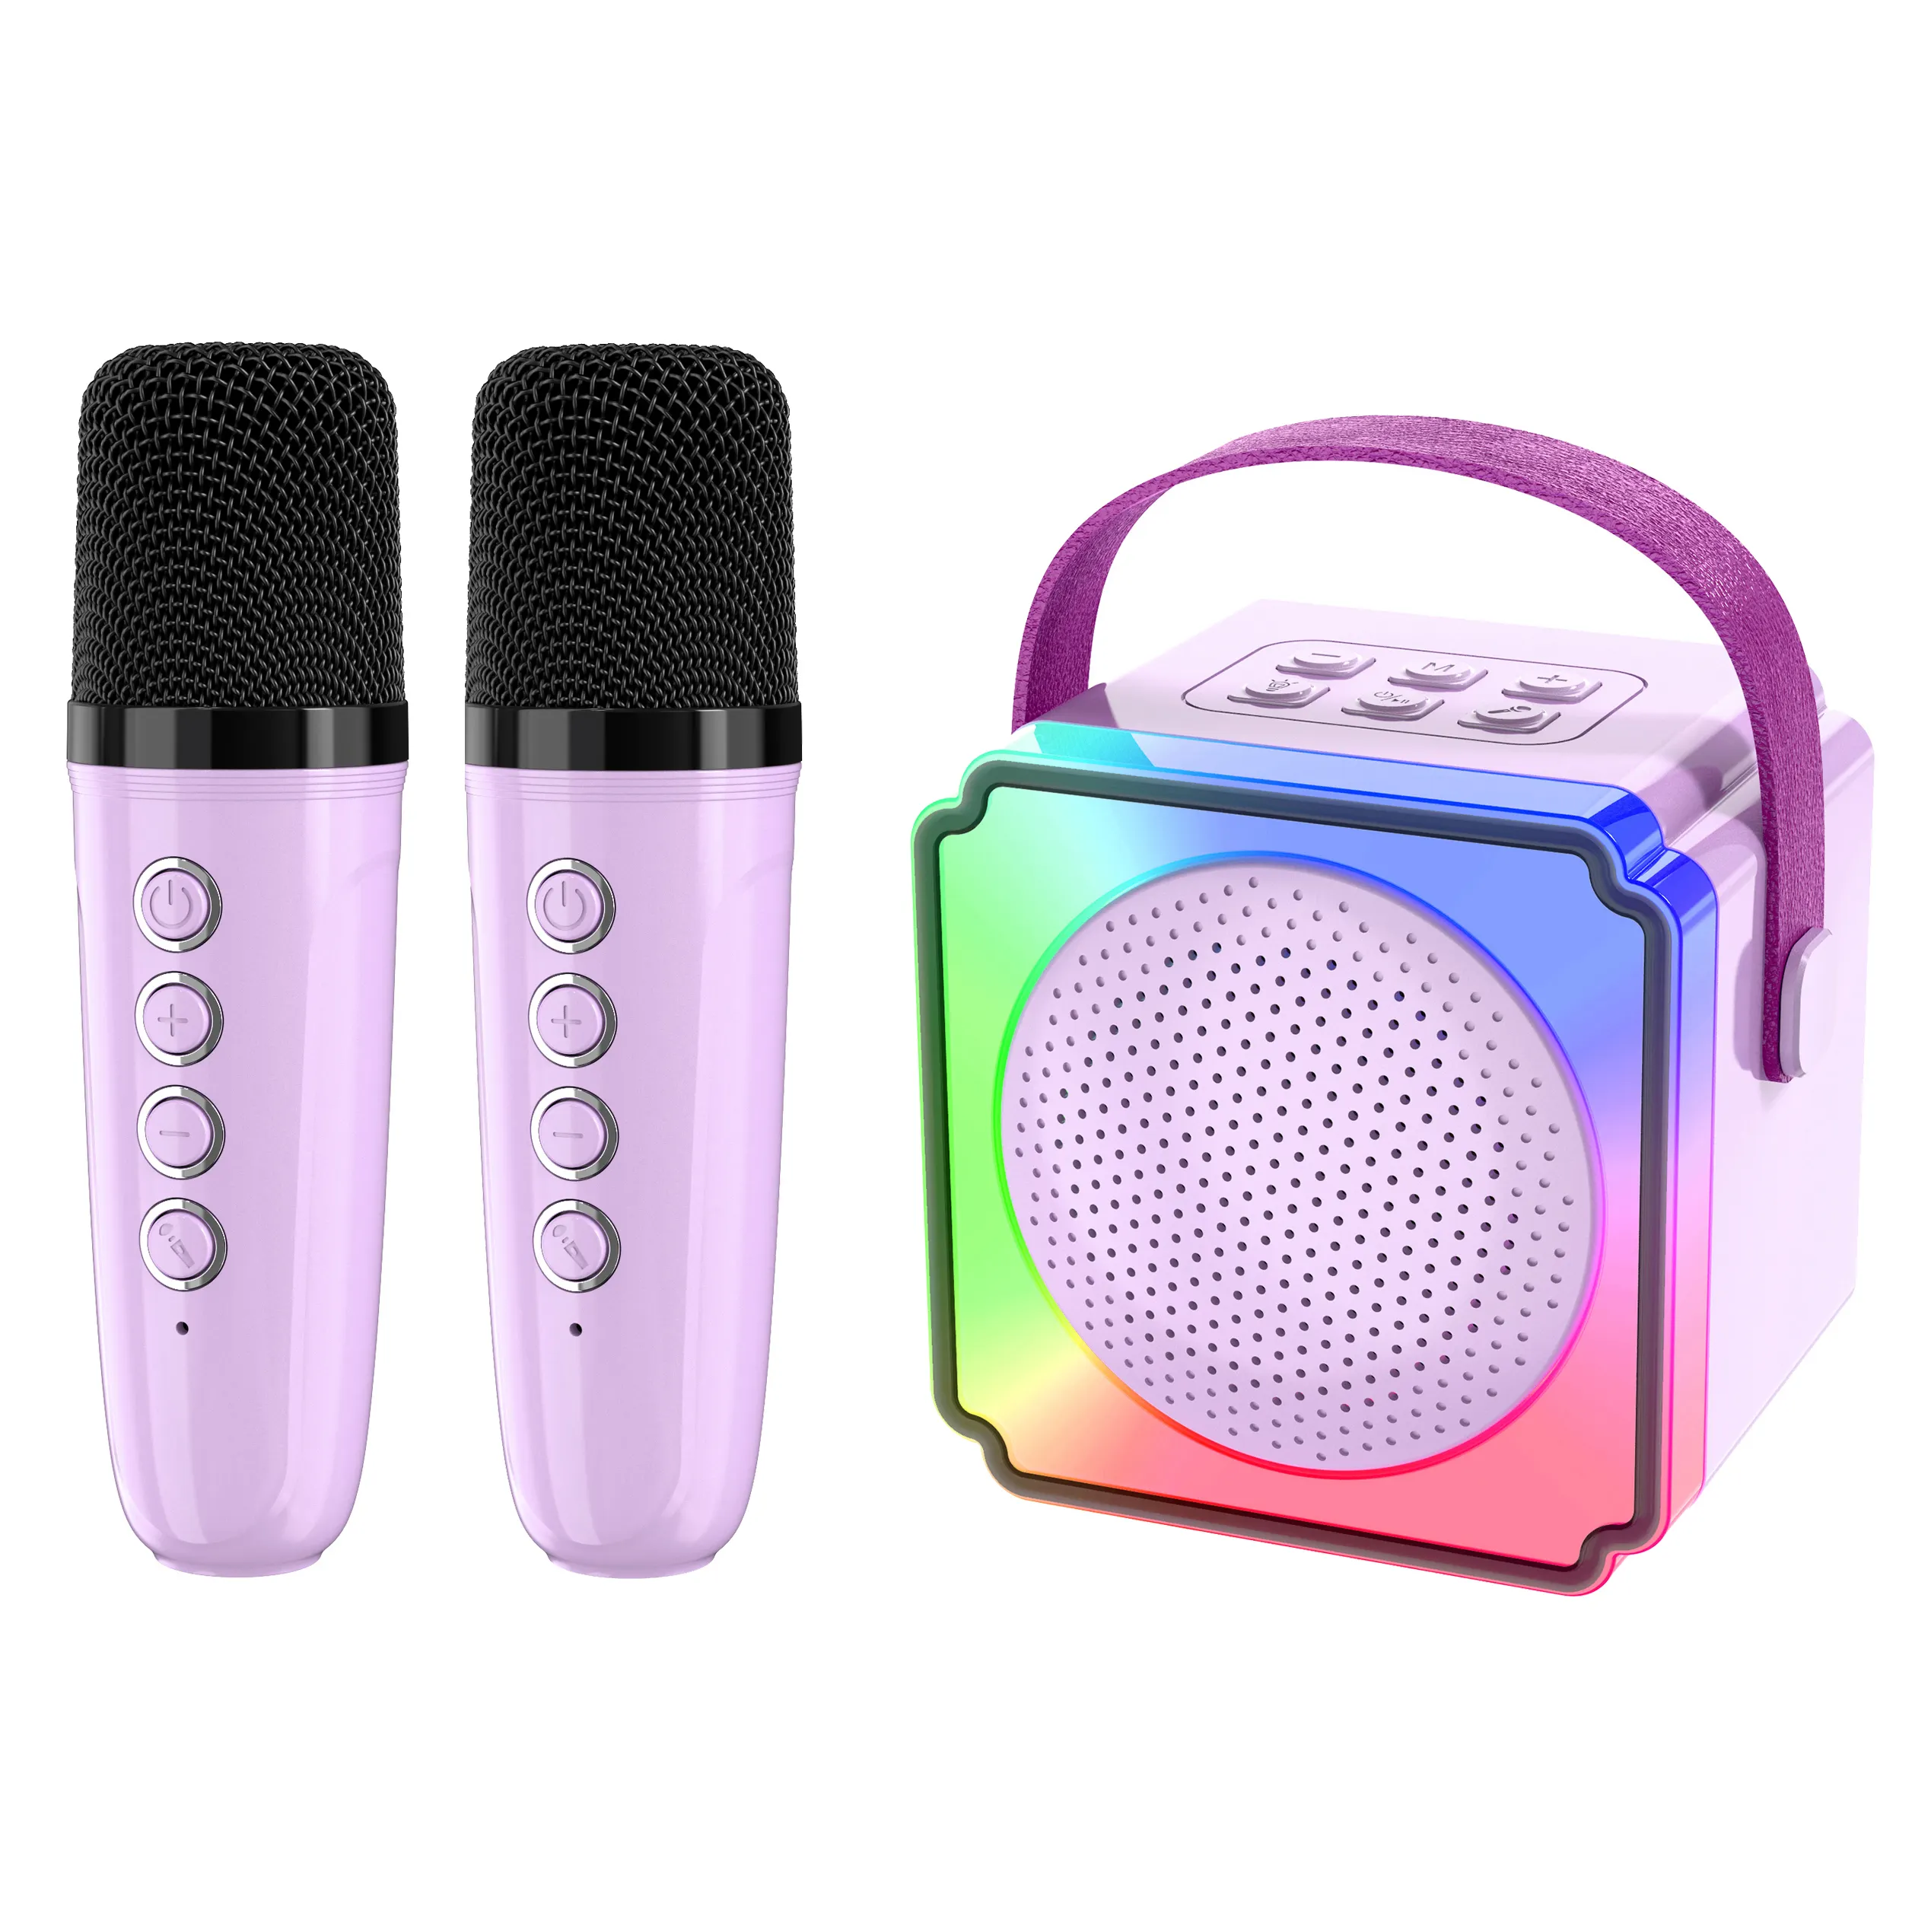 Subwoofer fiesta caja de música sonidos HiFi fiesta inalámbrica al aire libre karaoke mini Altavoz Bluetooth portátil inteligente